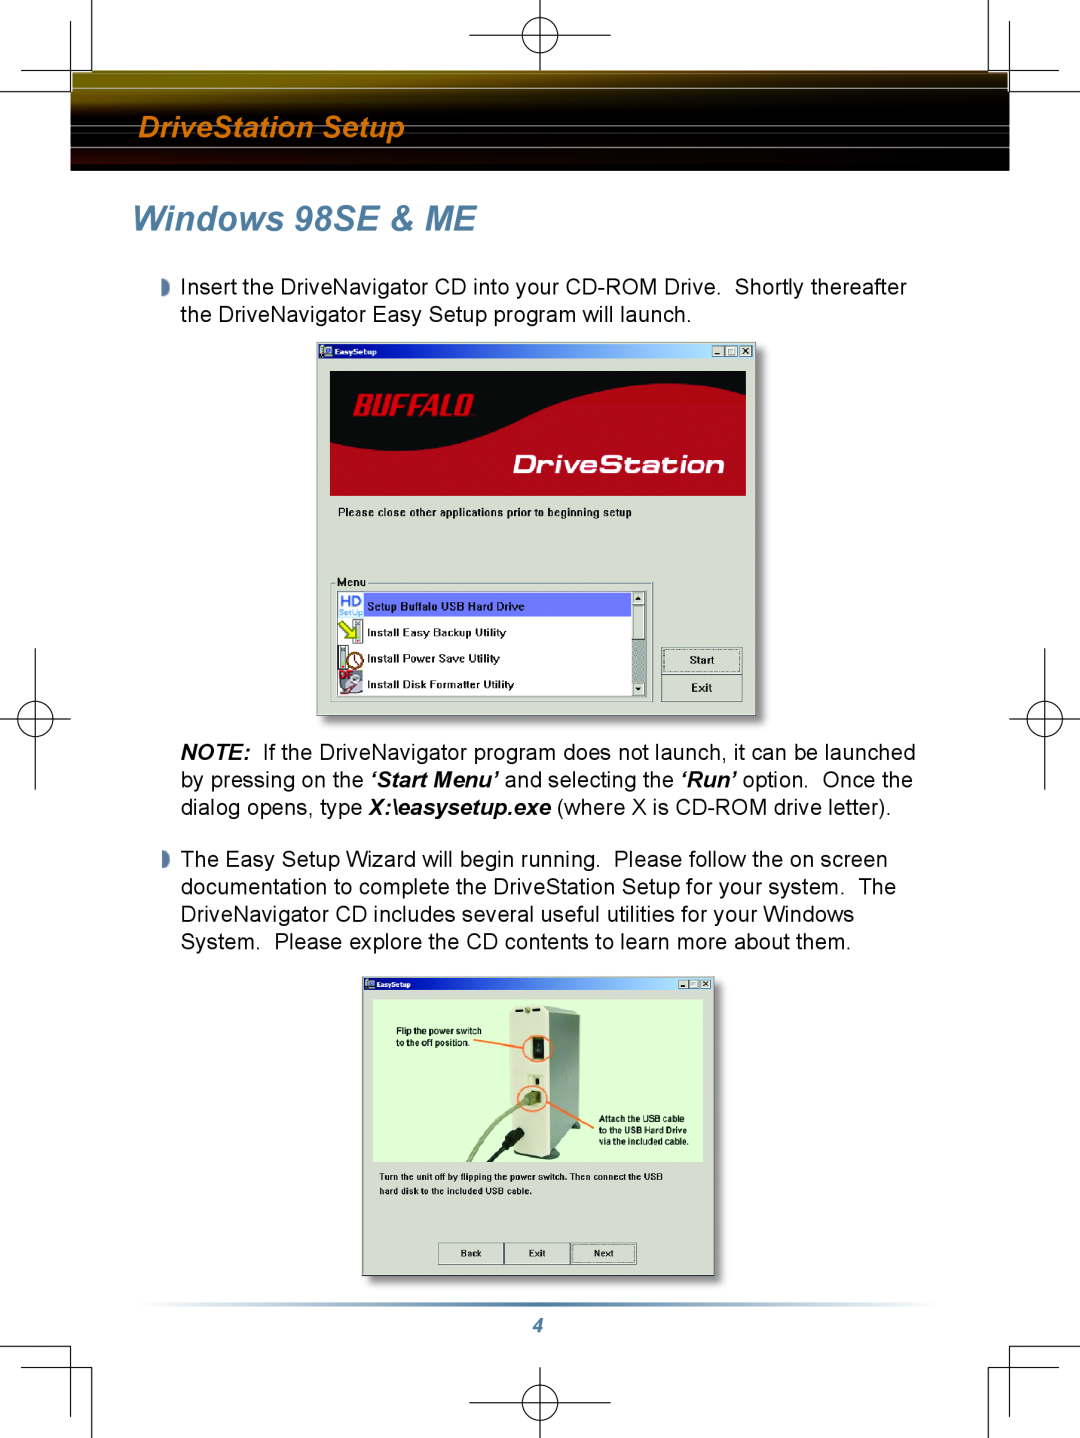 Buffalo Technology HD-HBU2 setup guide Windows 98SE & ME, DriveStation Setup 